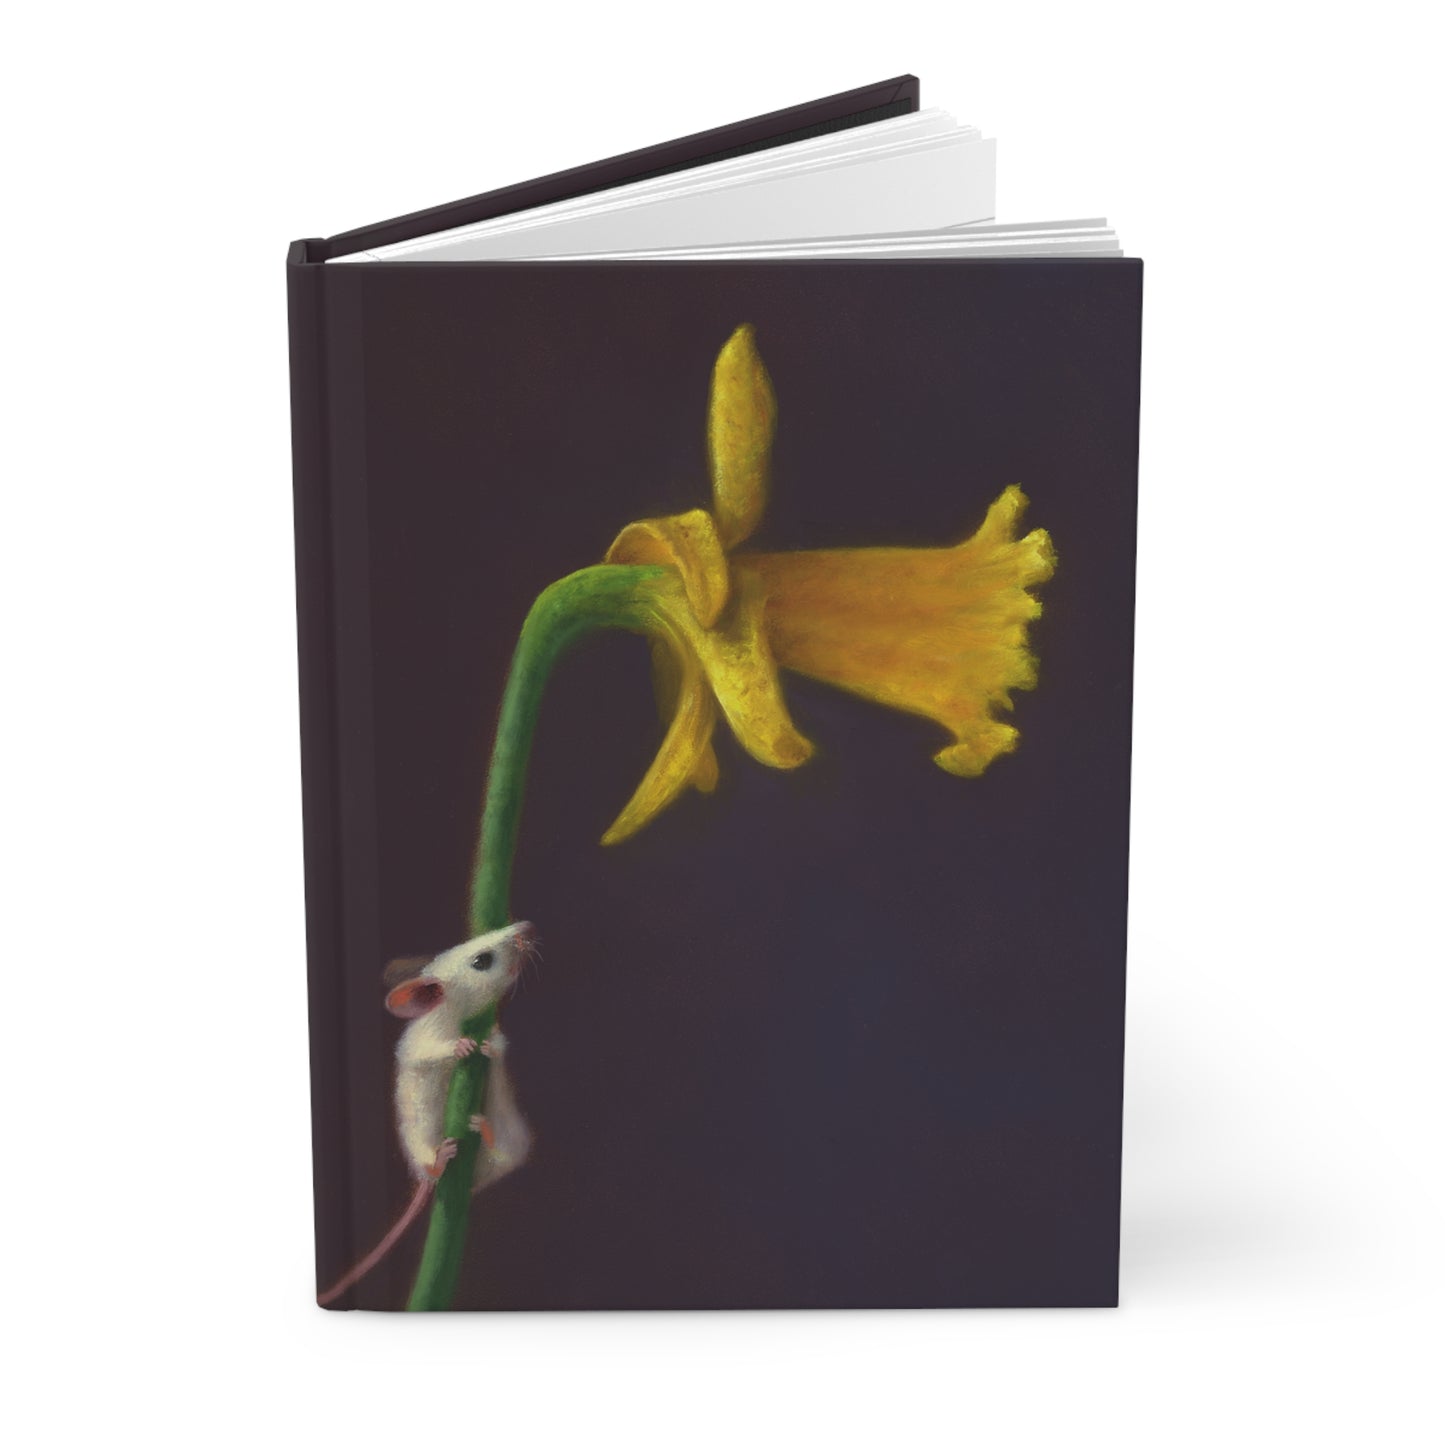 Stuart Dunkel: "Curious Yellow" -  Hardcover Journal